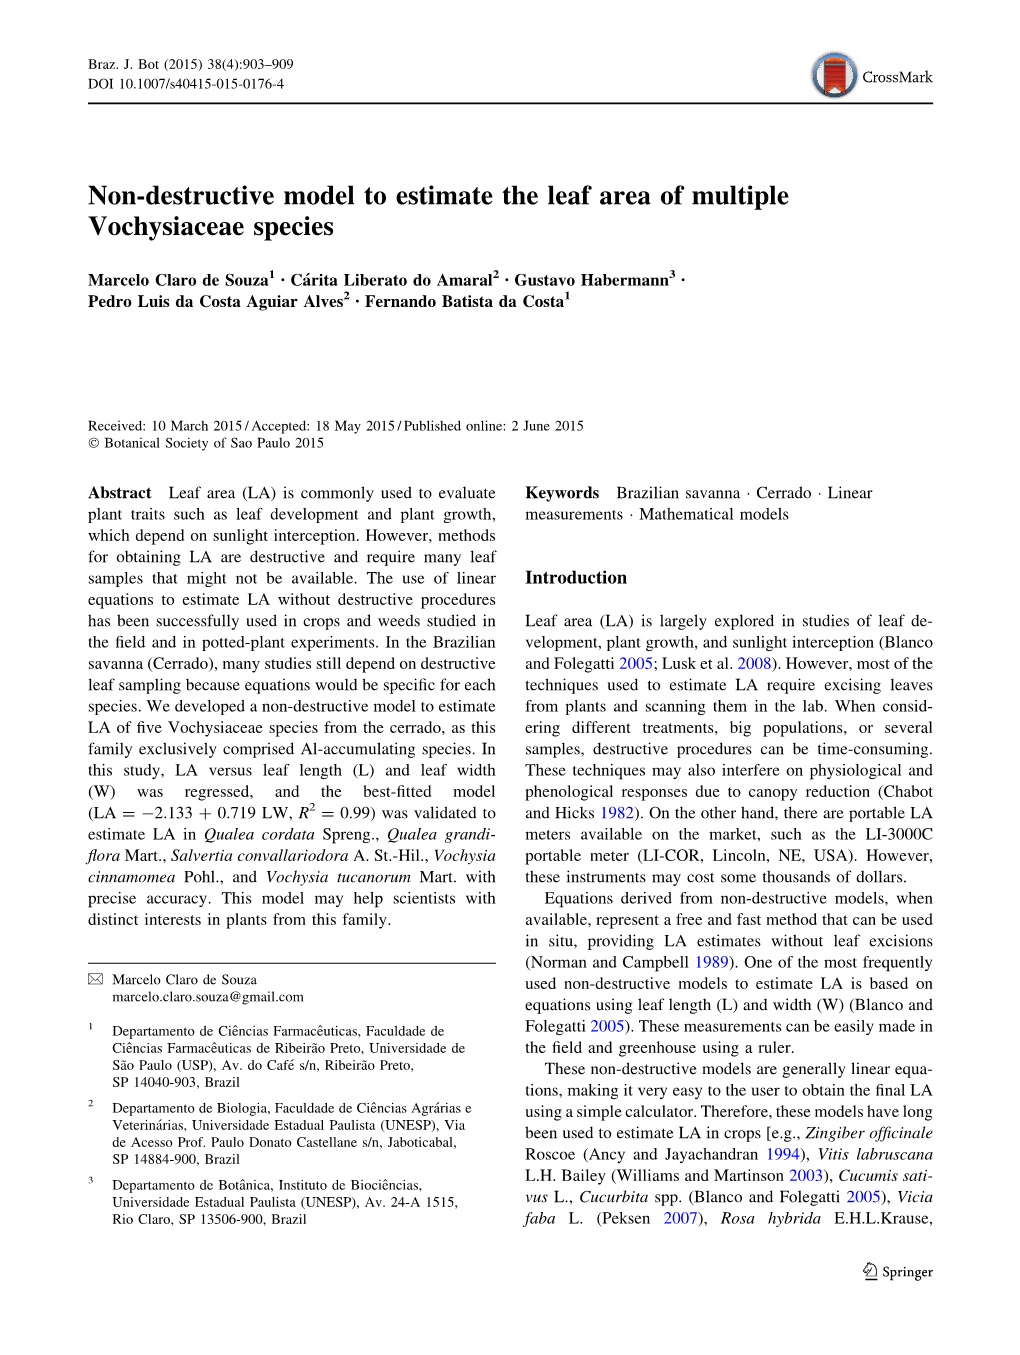 Non-Destructive Model to Estimate the Leaf Area of Multiple Vochysiaceae Species